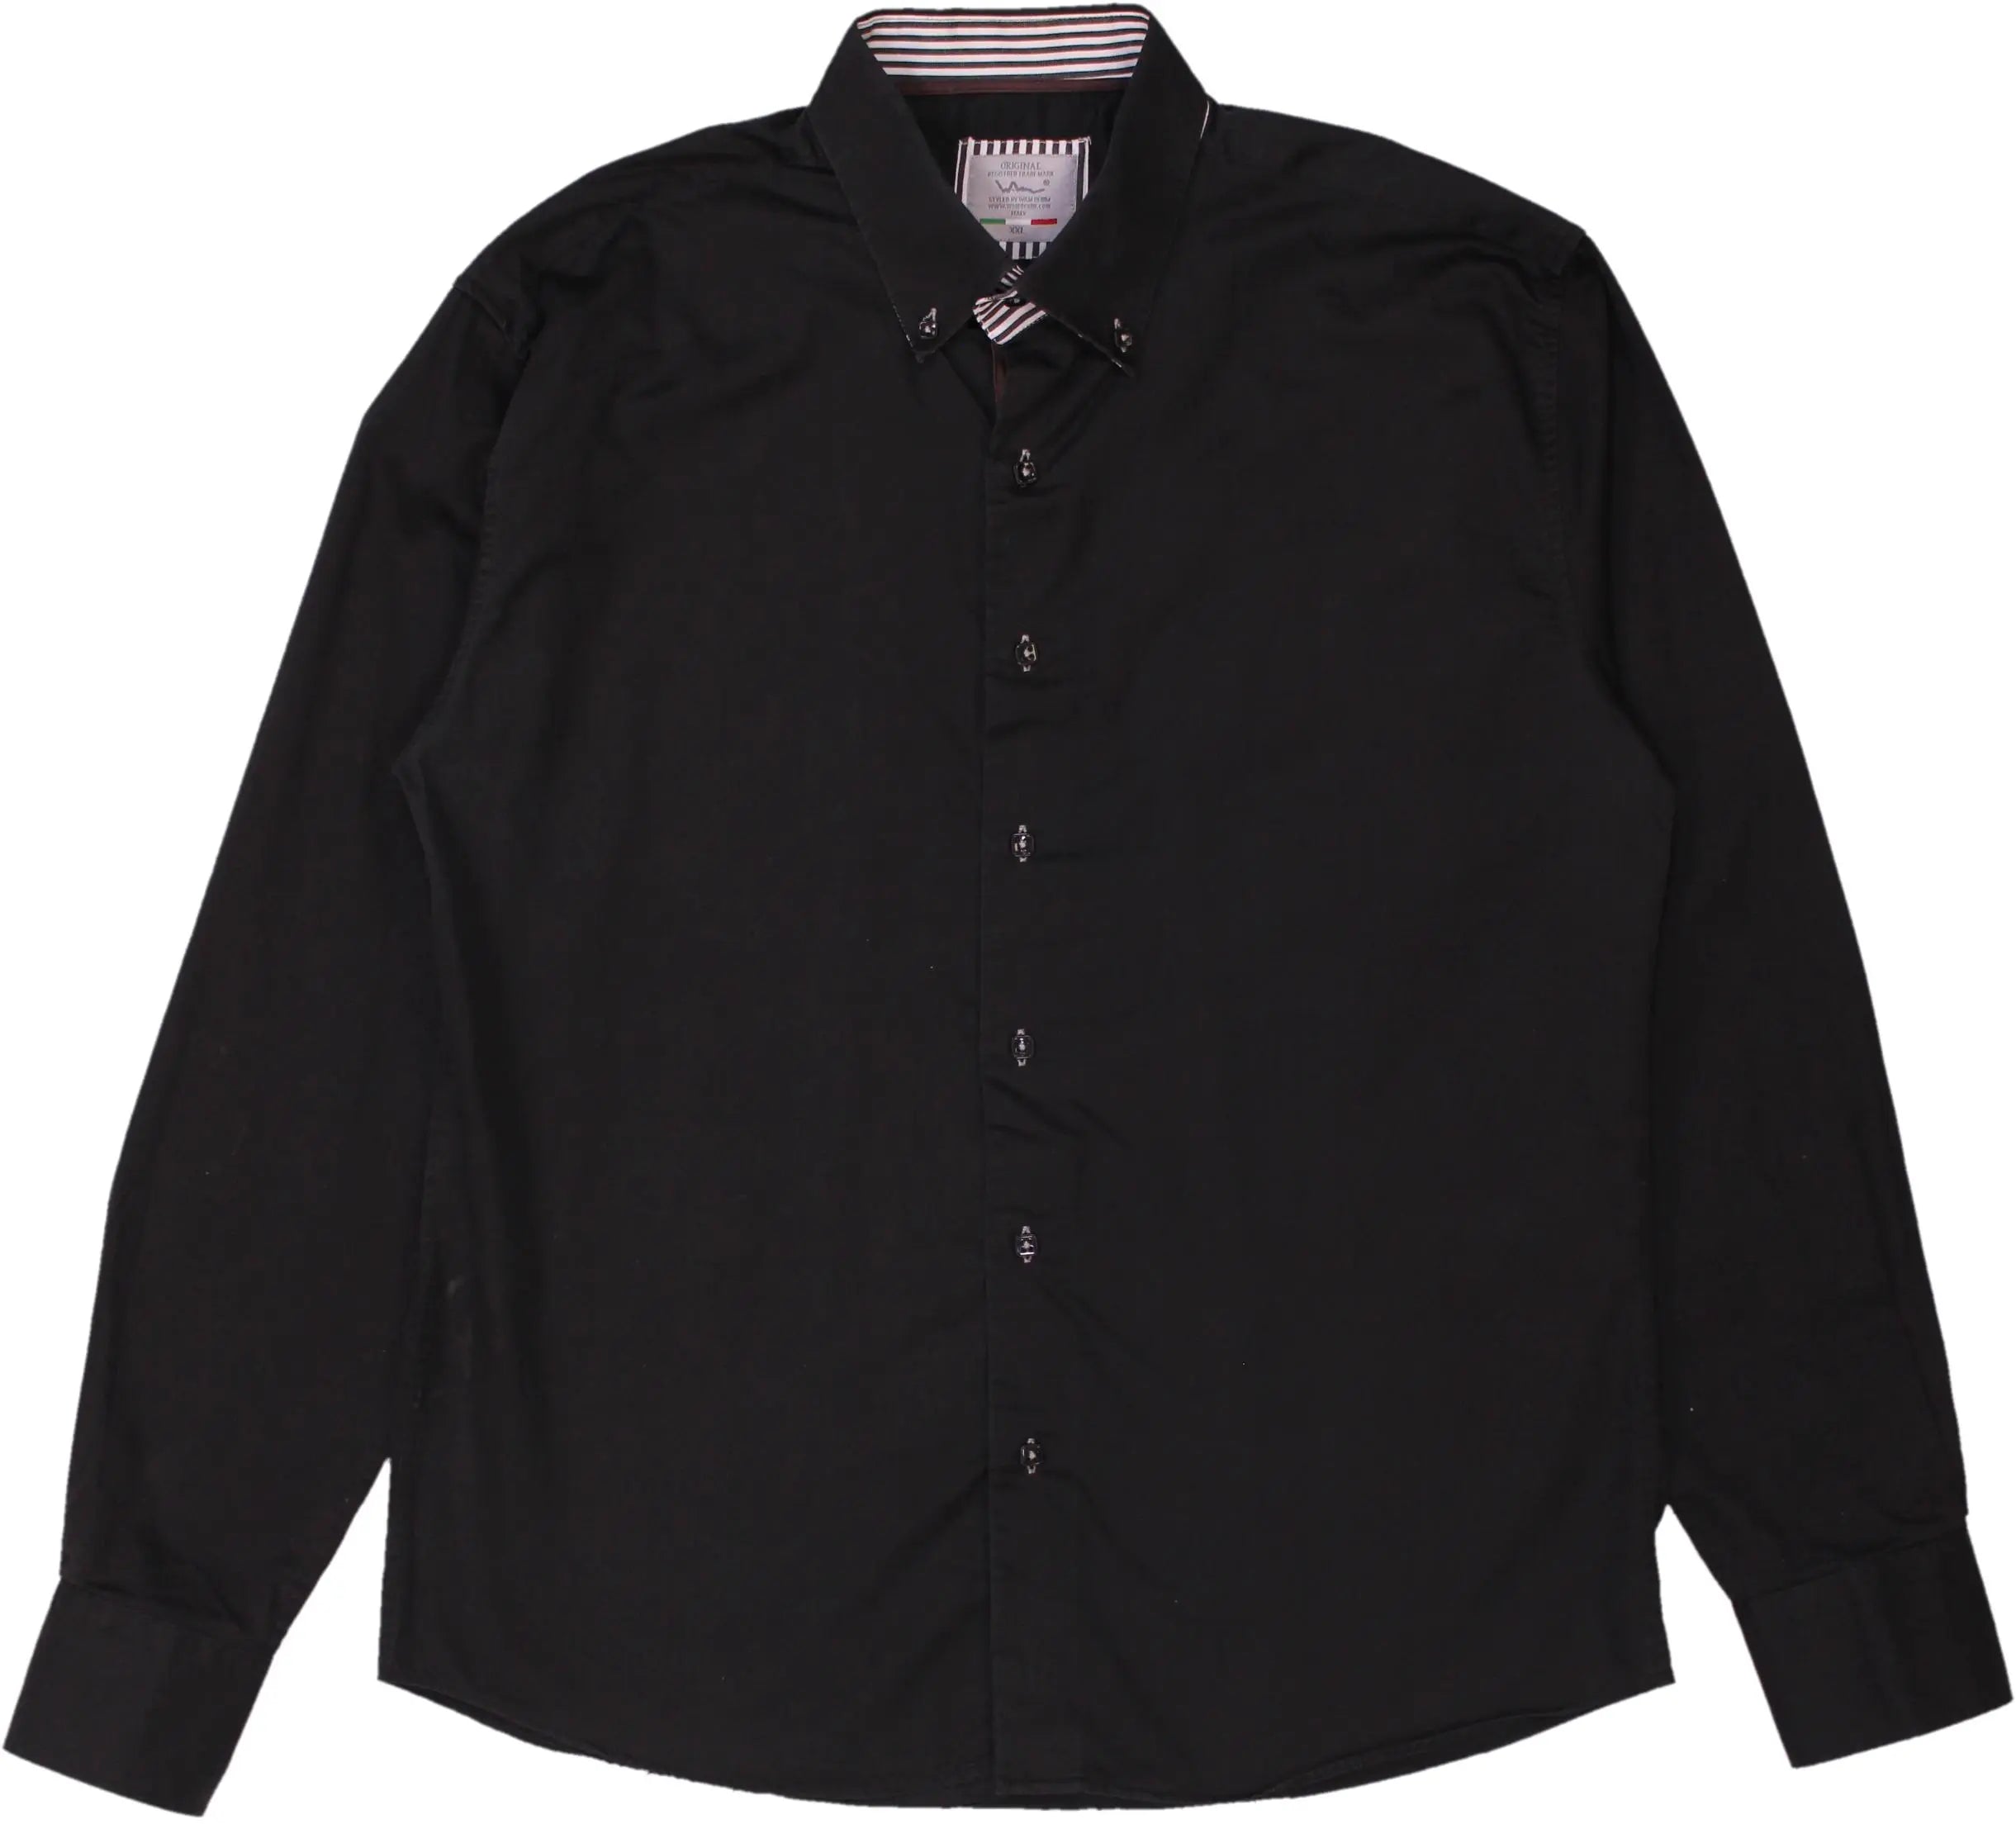 WAM Denim - Black Shirt- ThriftTale.com - Vintage and second handclothing